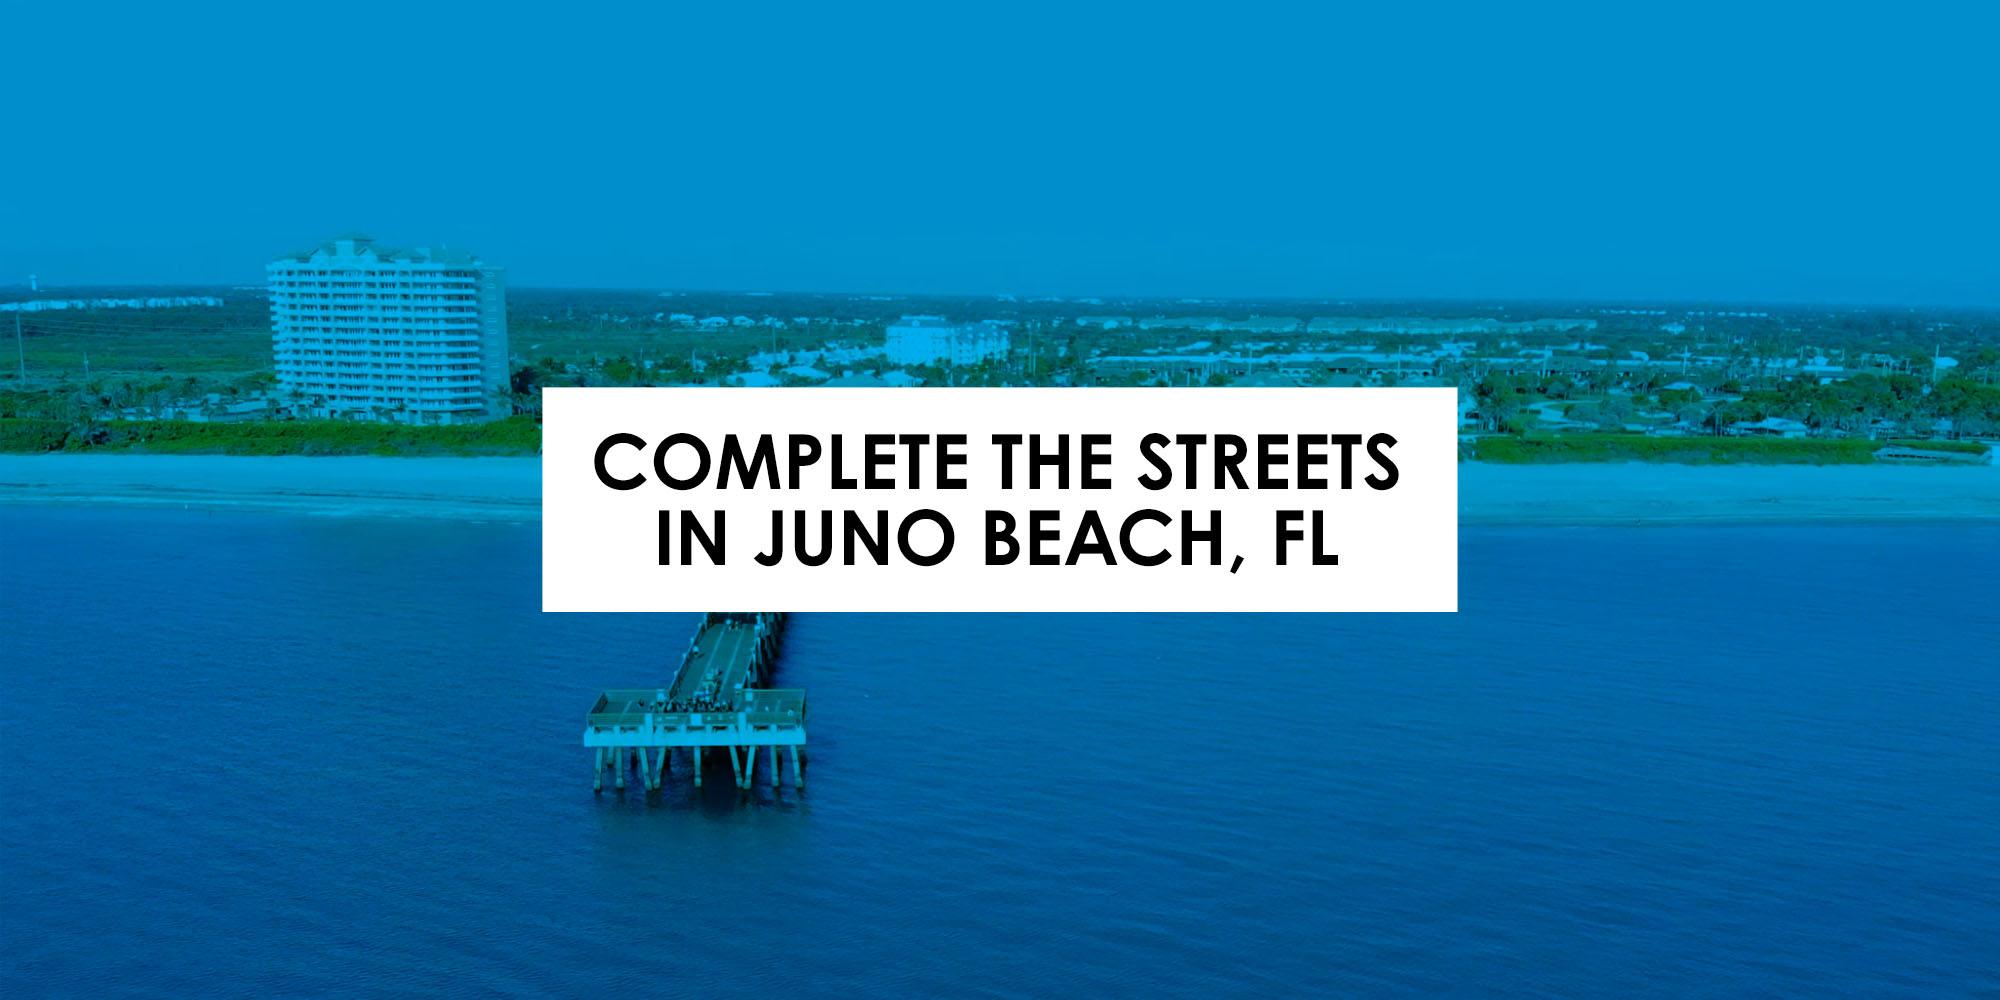 Complete the Streets Initiative in Juno Beach, Florida